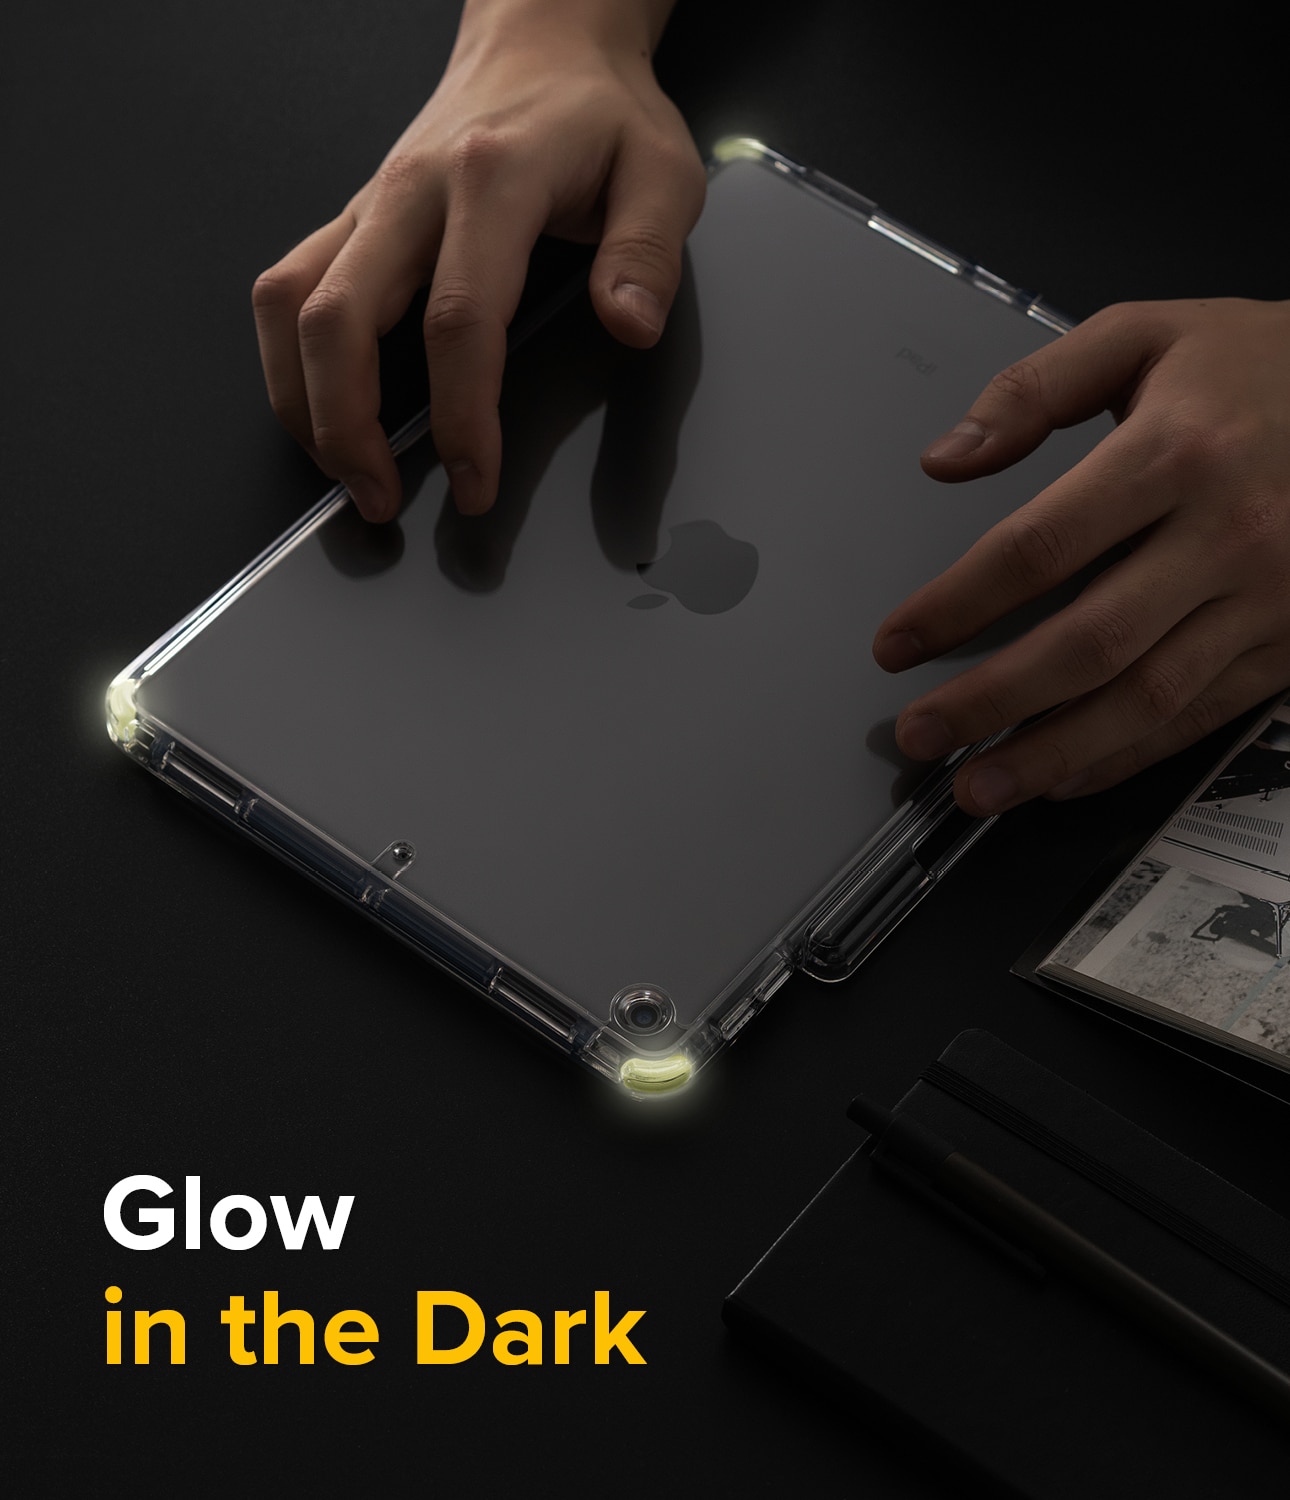 Fusion Plus Case iPad 10.2 7th Gen (2019) White/Lime Glow